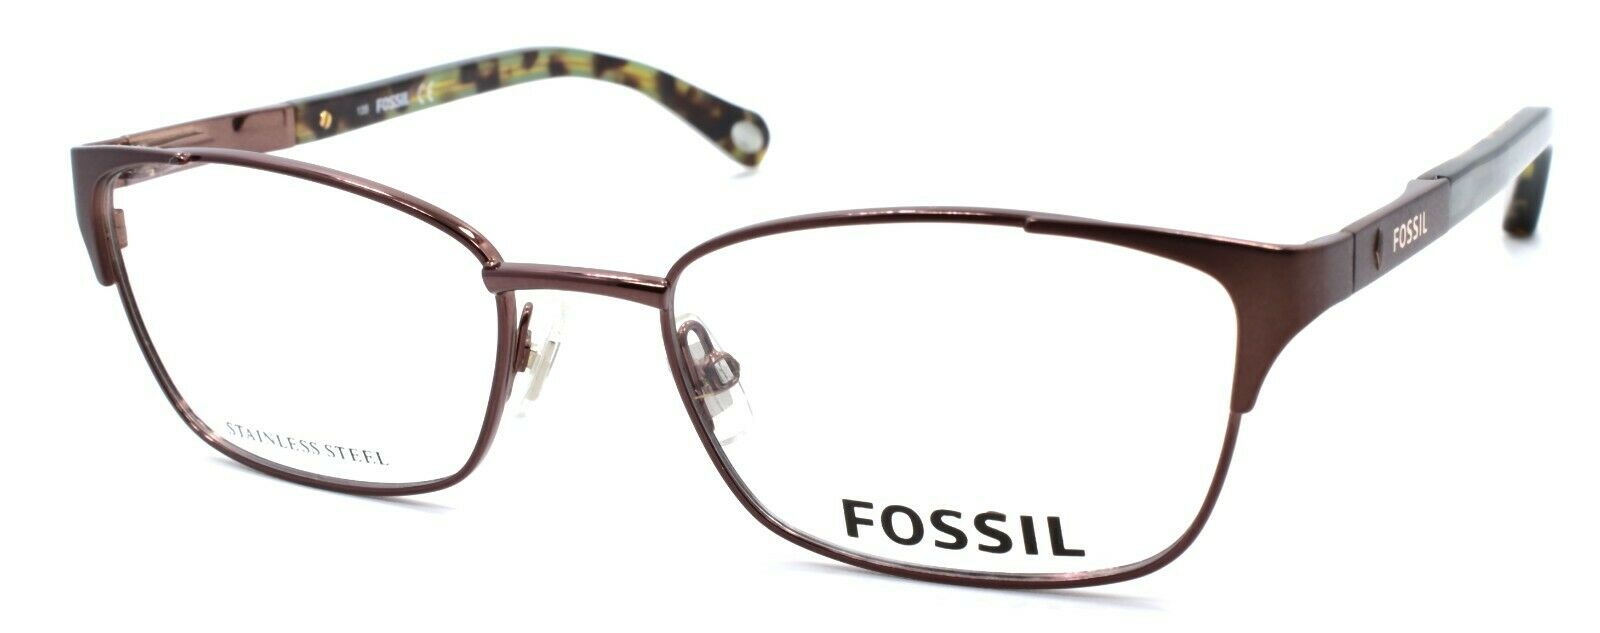 1-Fossil FOS 6048 0TY6 Women's Eyeglasses Frames 50-17-135 Brown-716737698426-IKSpecs